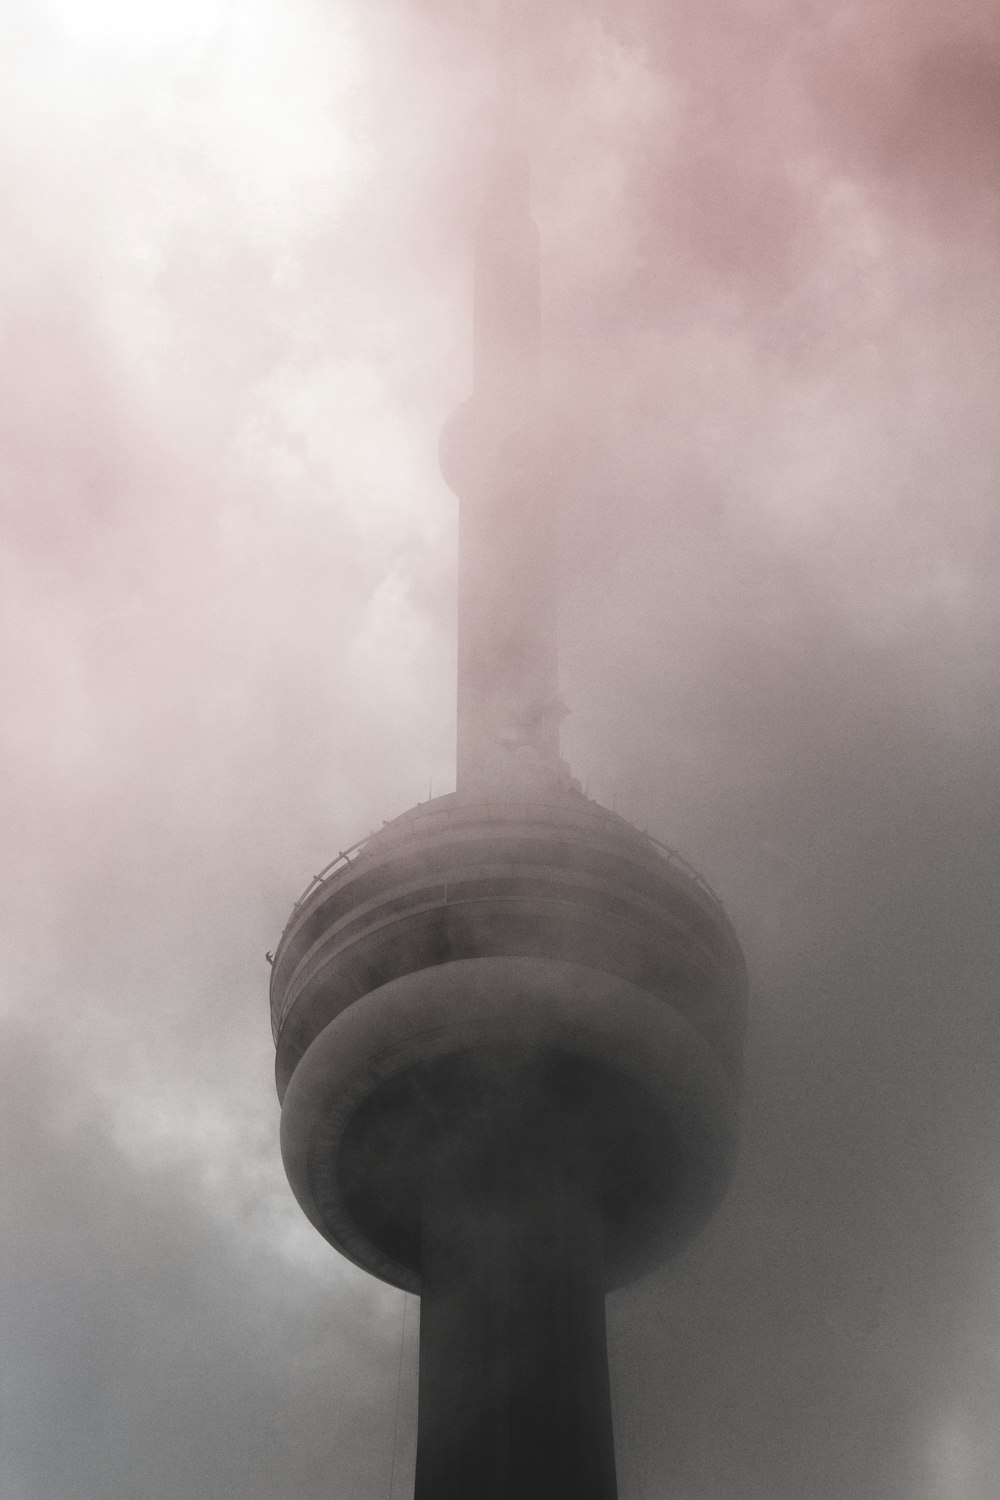 CN Tower, Canada